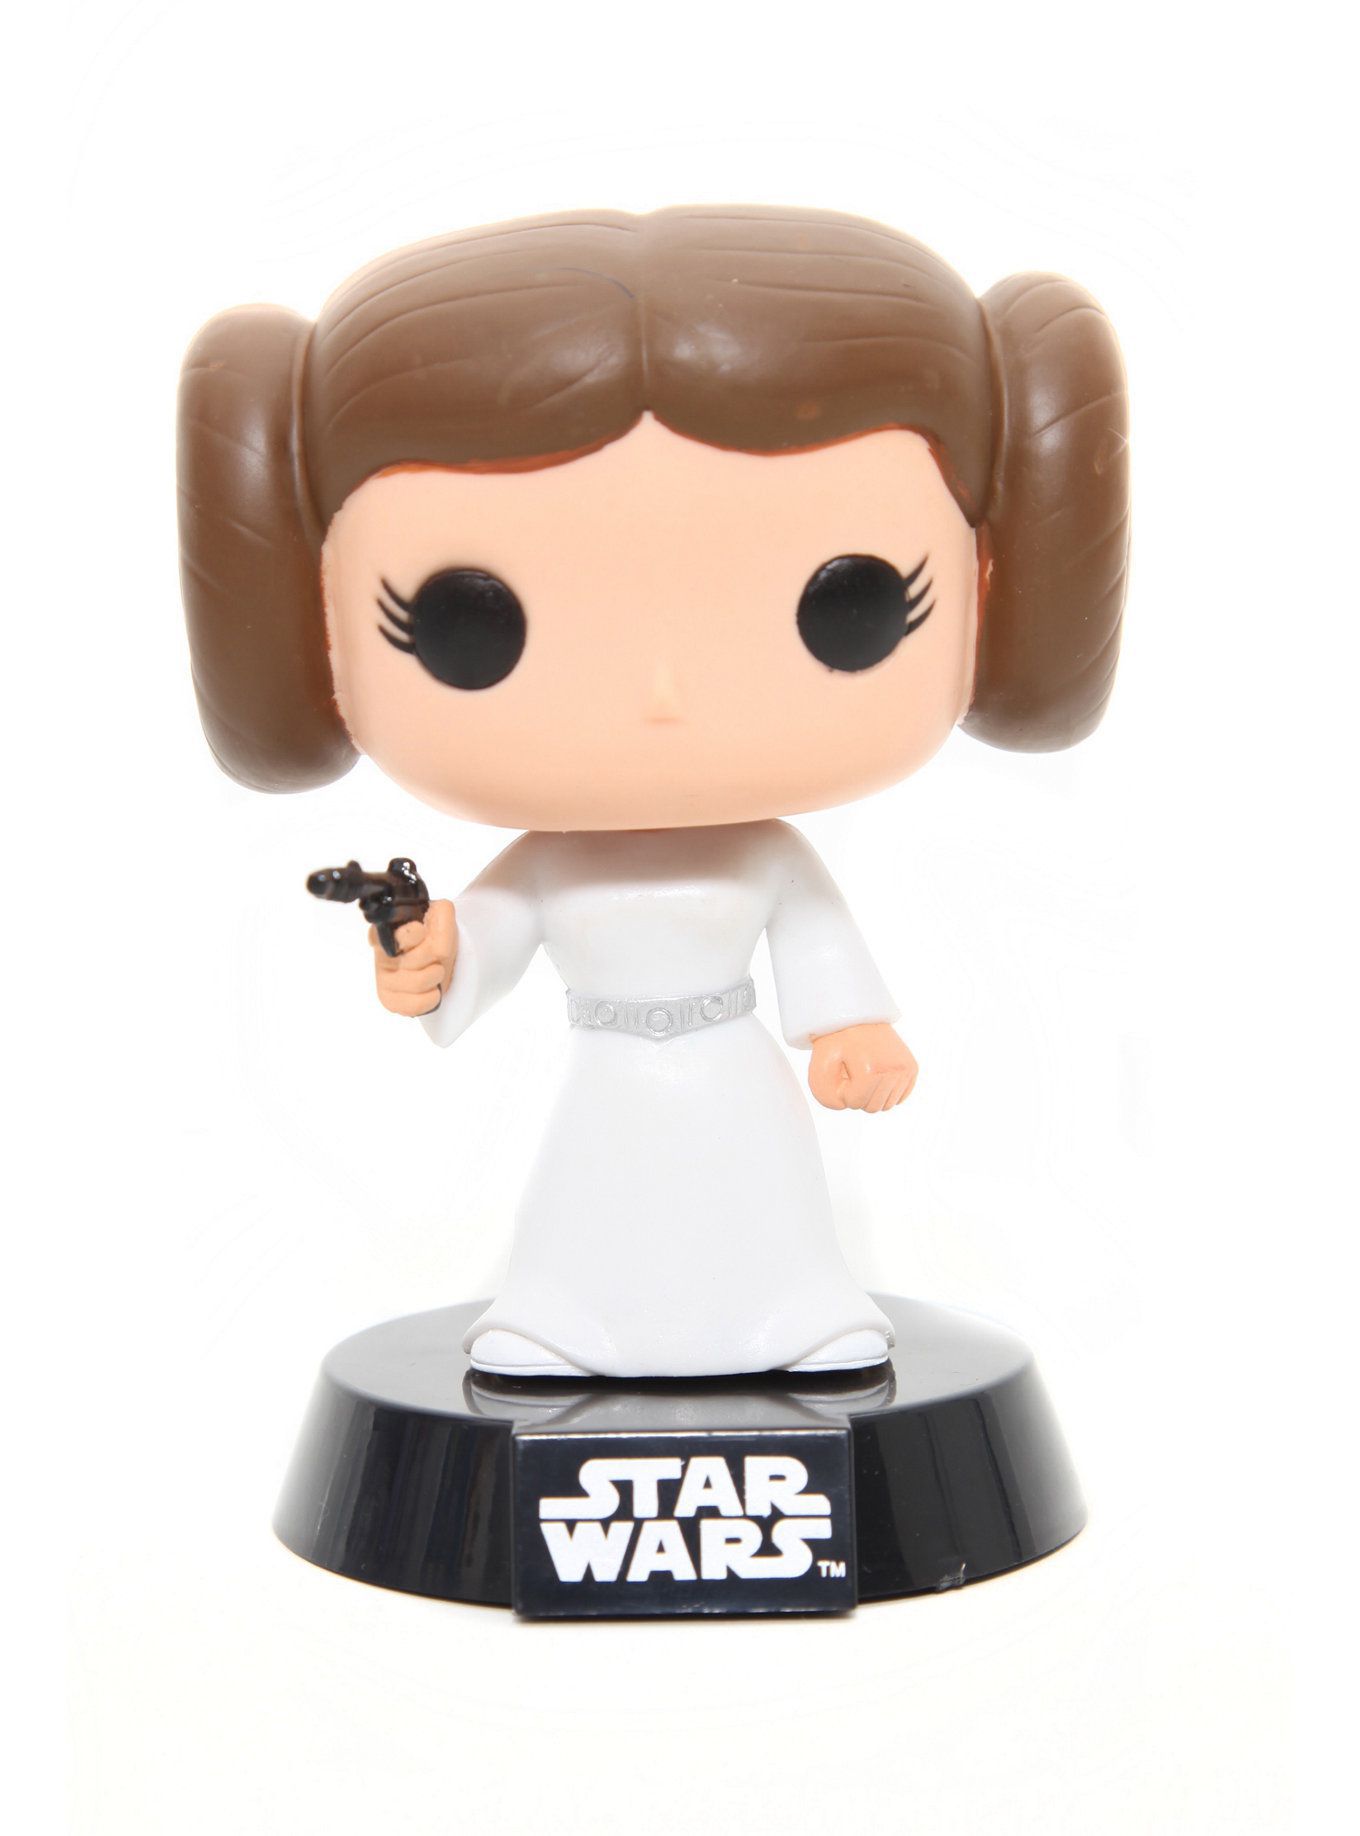 Princess Leia #04 ( Princesa Leia ) - Star Wars - Funko Pop!